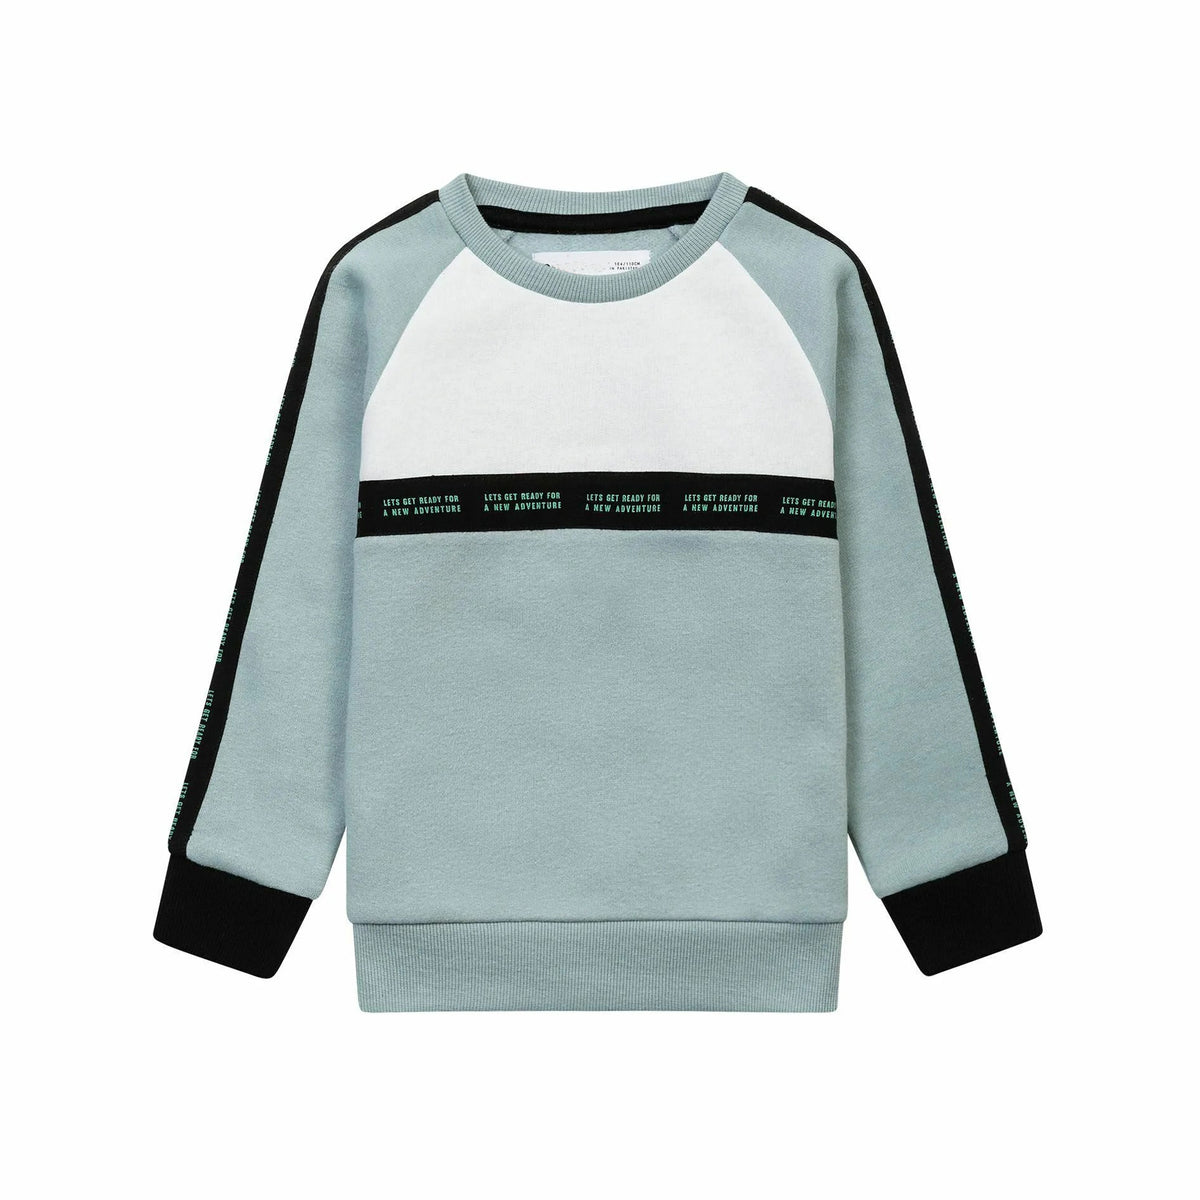 Premium Quality Canvas Printed Fleece Sweatshirt For Kids